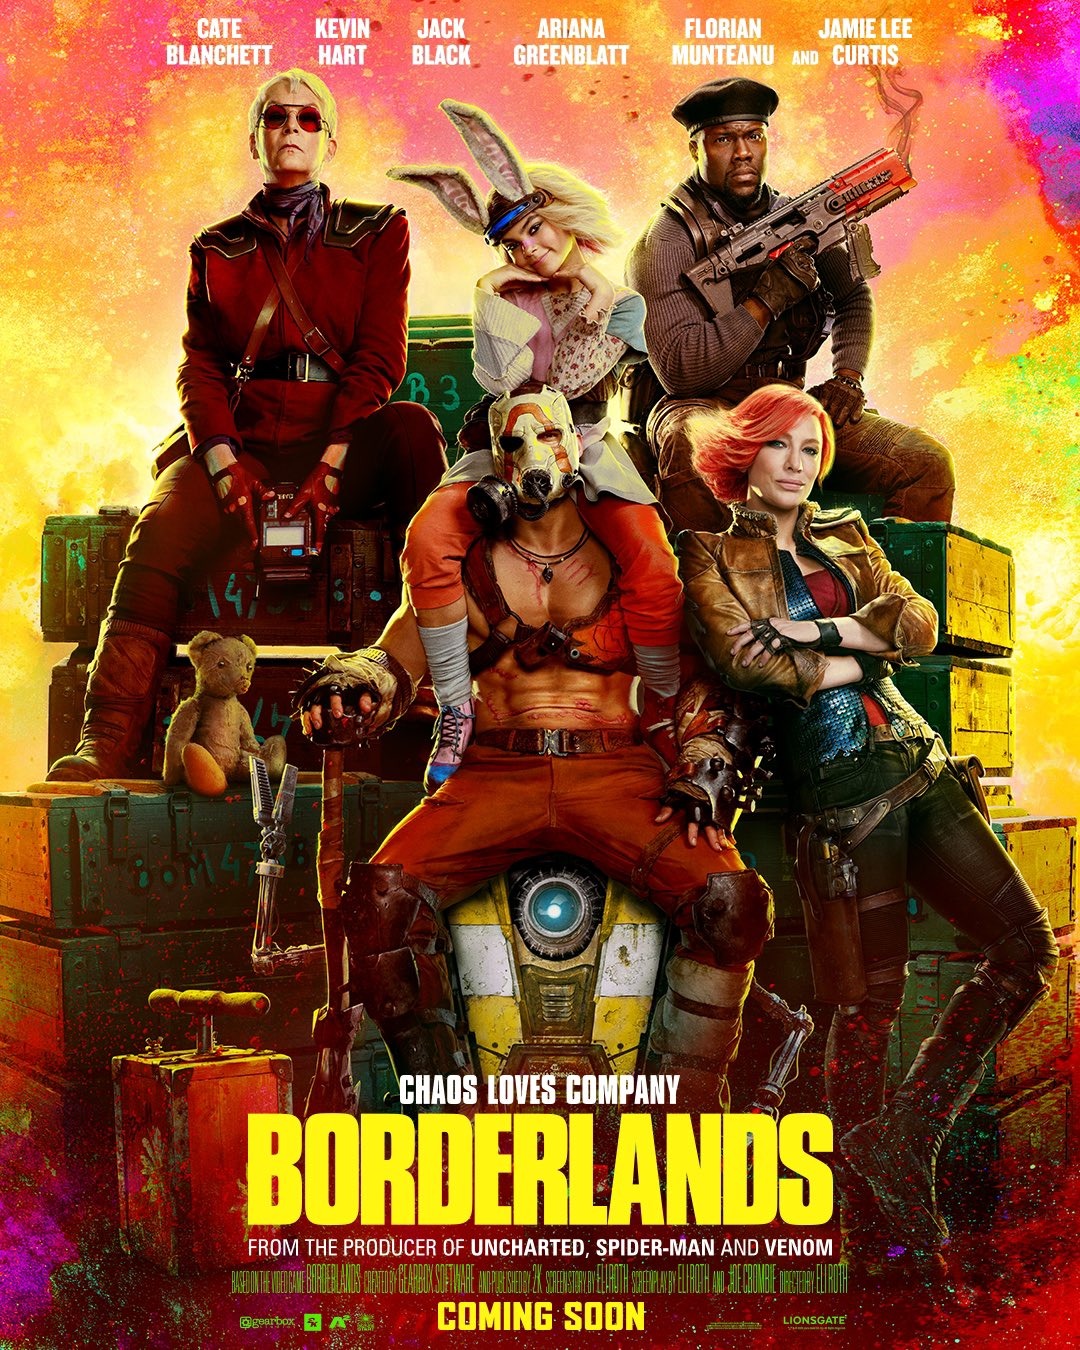 Borderlands movie trailer poster